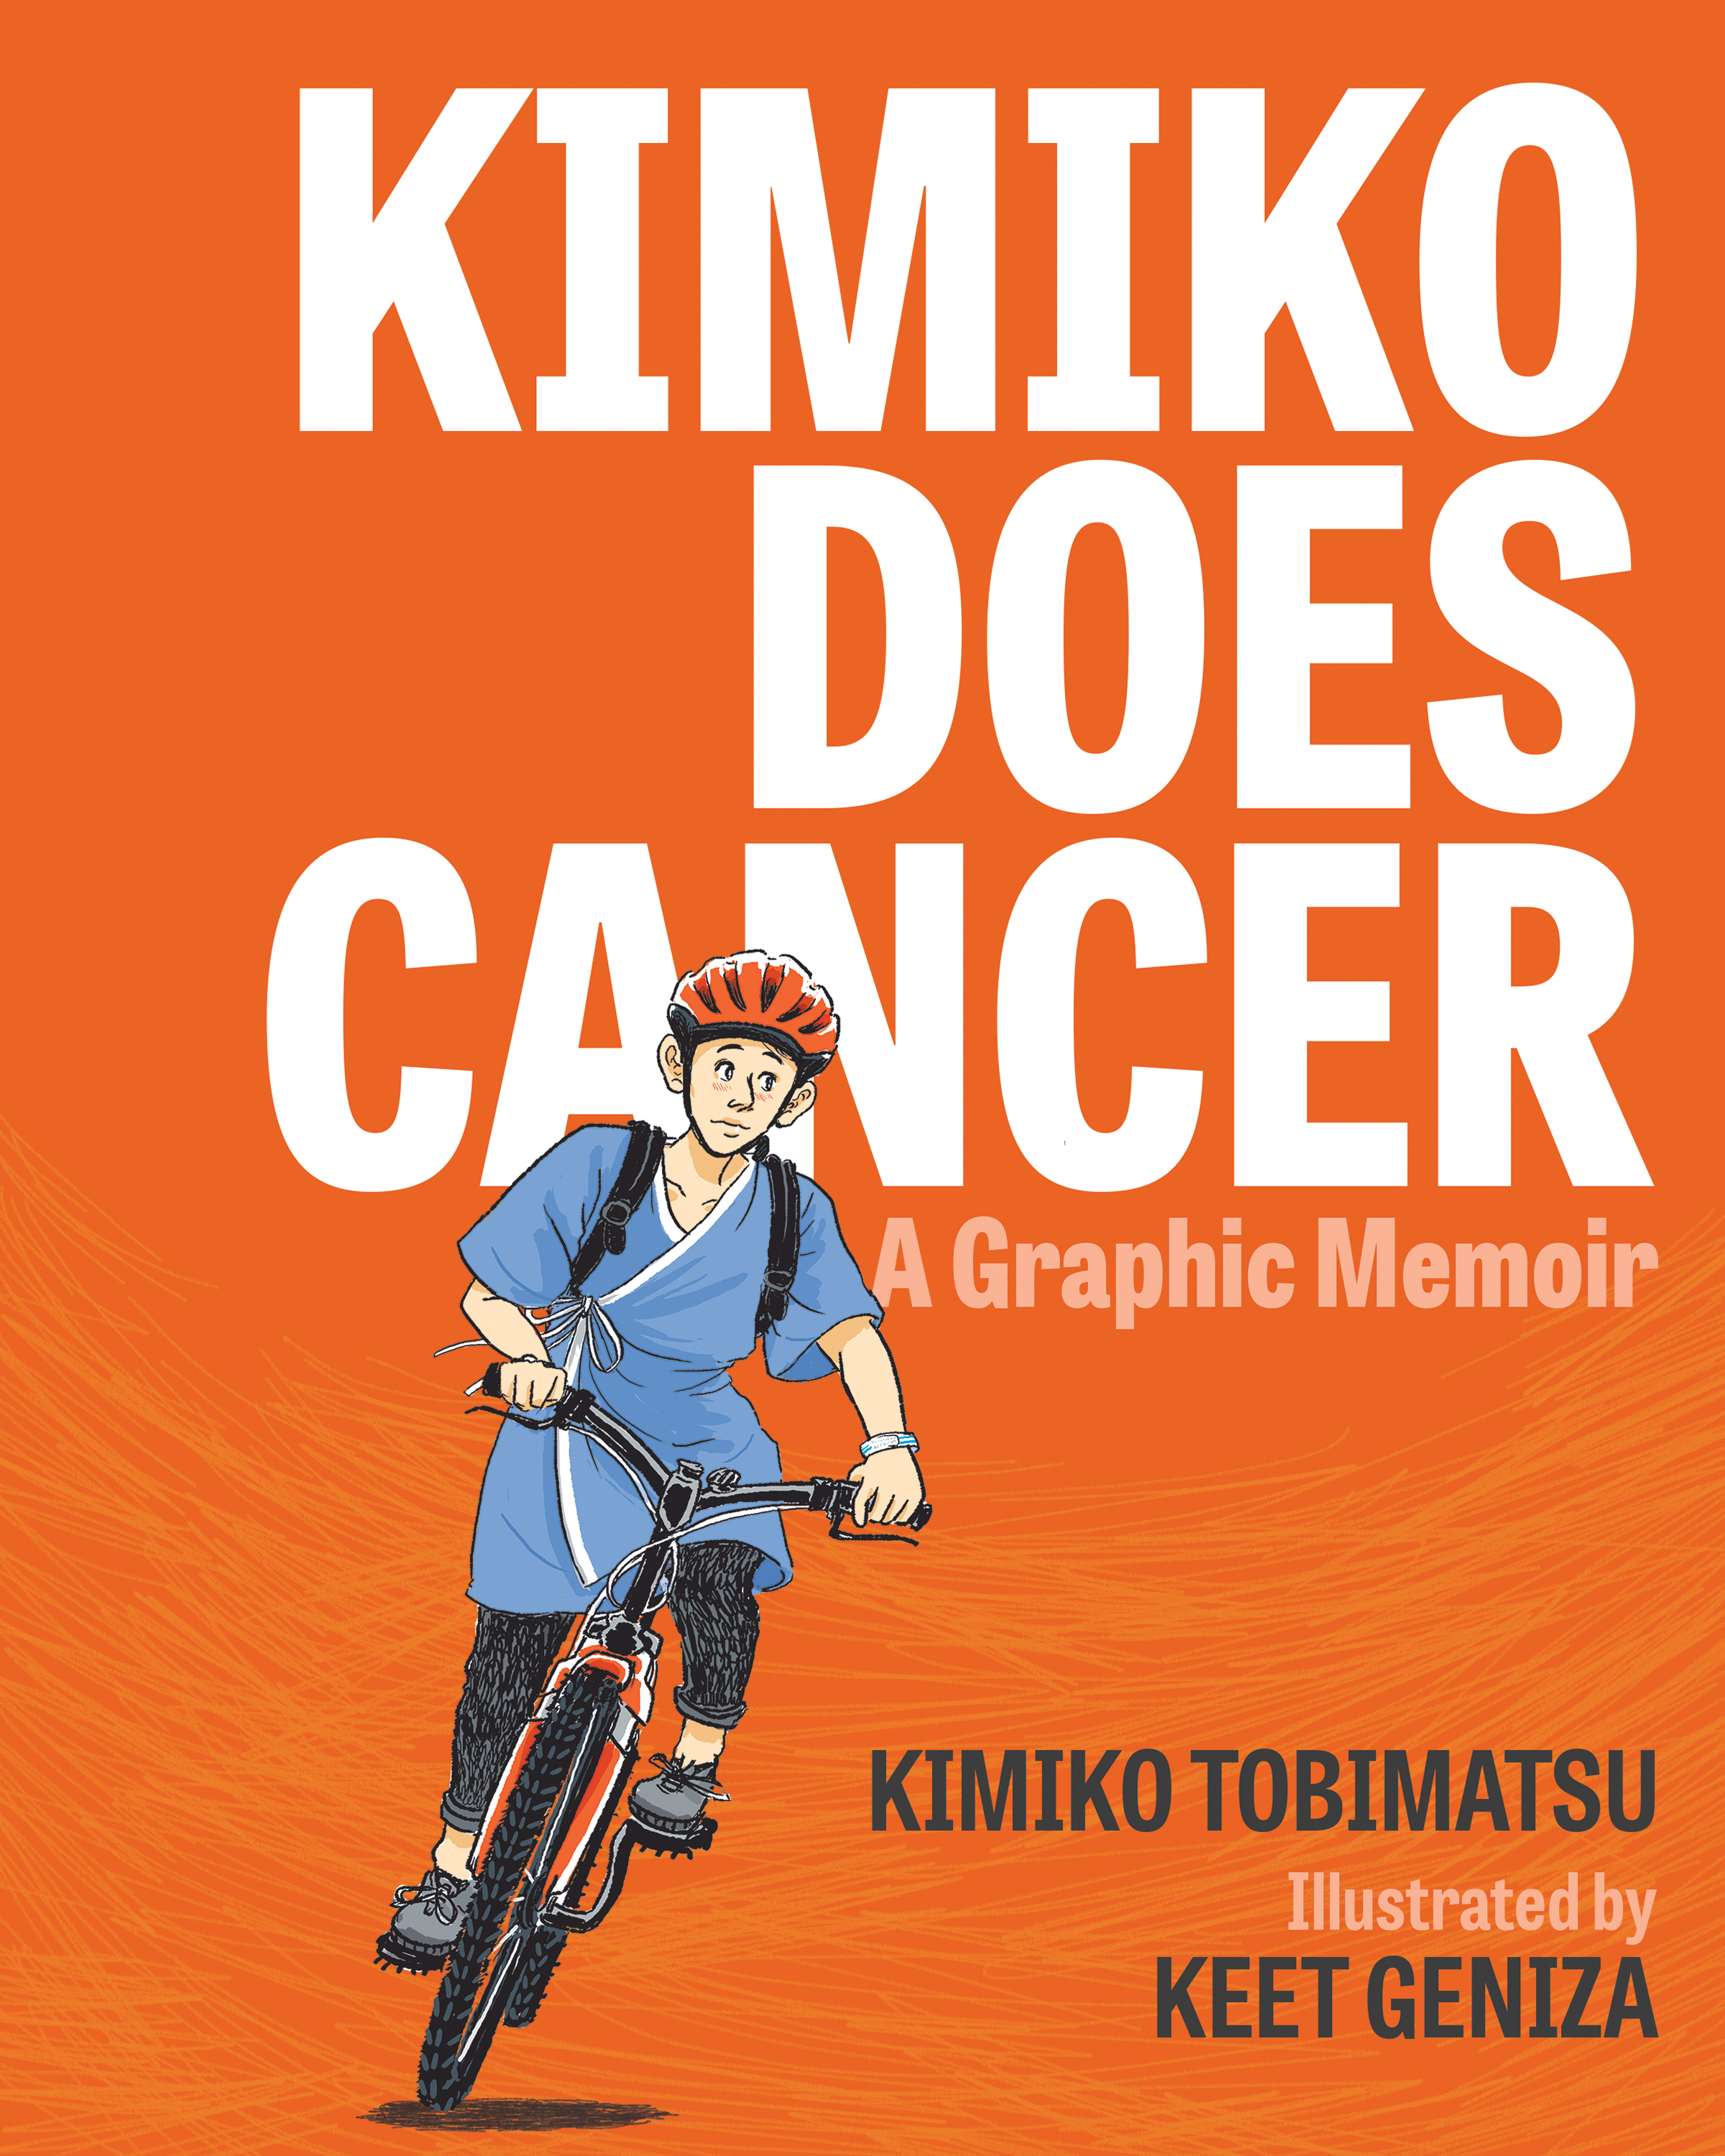 Kimiko Does Cancer: A Graphic Memoir by Kimiko Tobimatsu